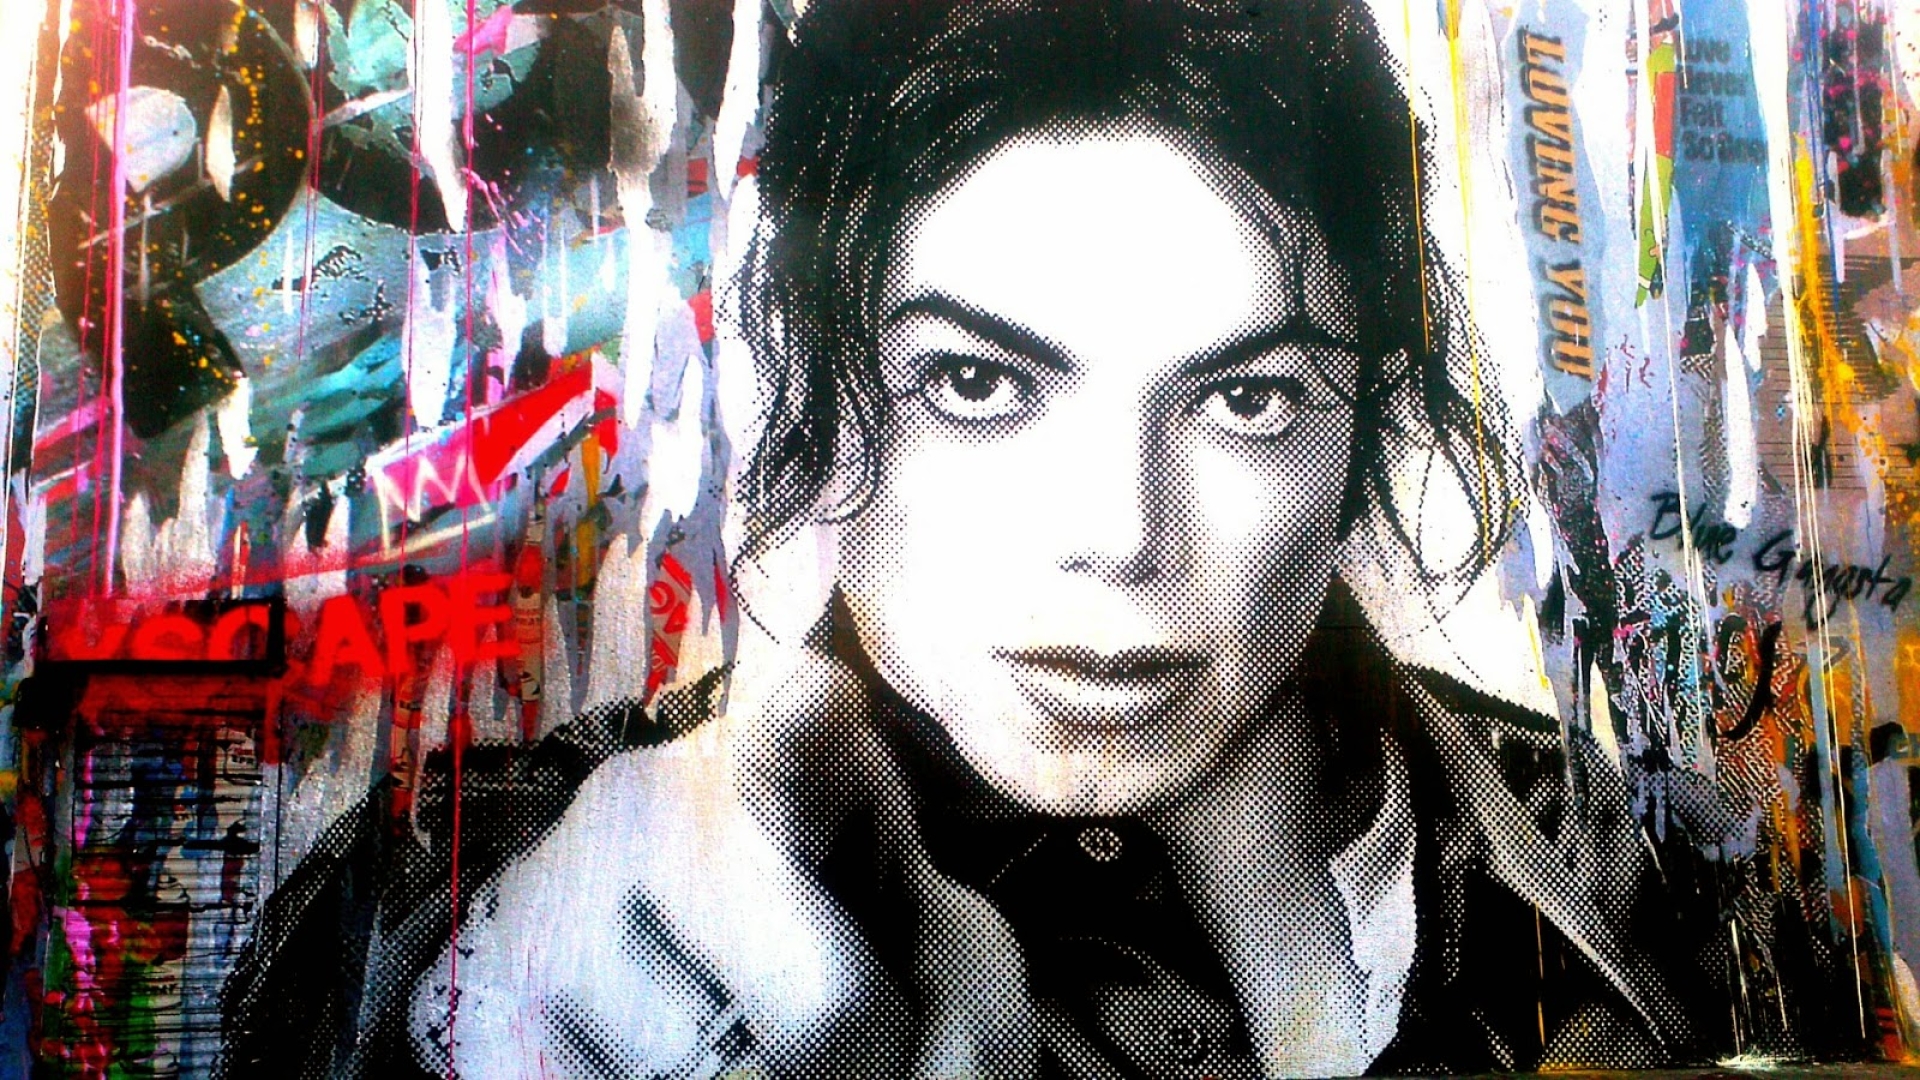 Michael Jackson em Full HD